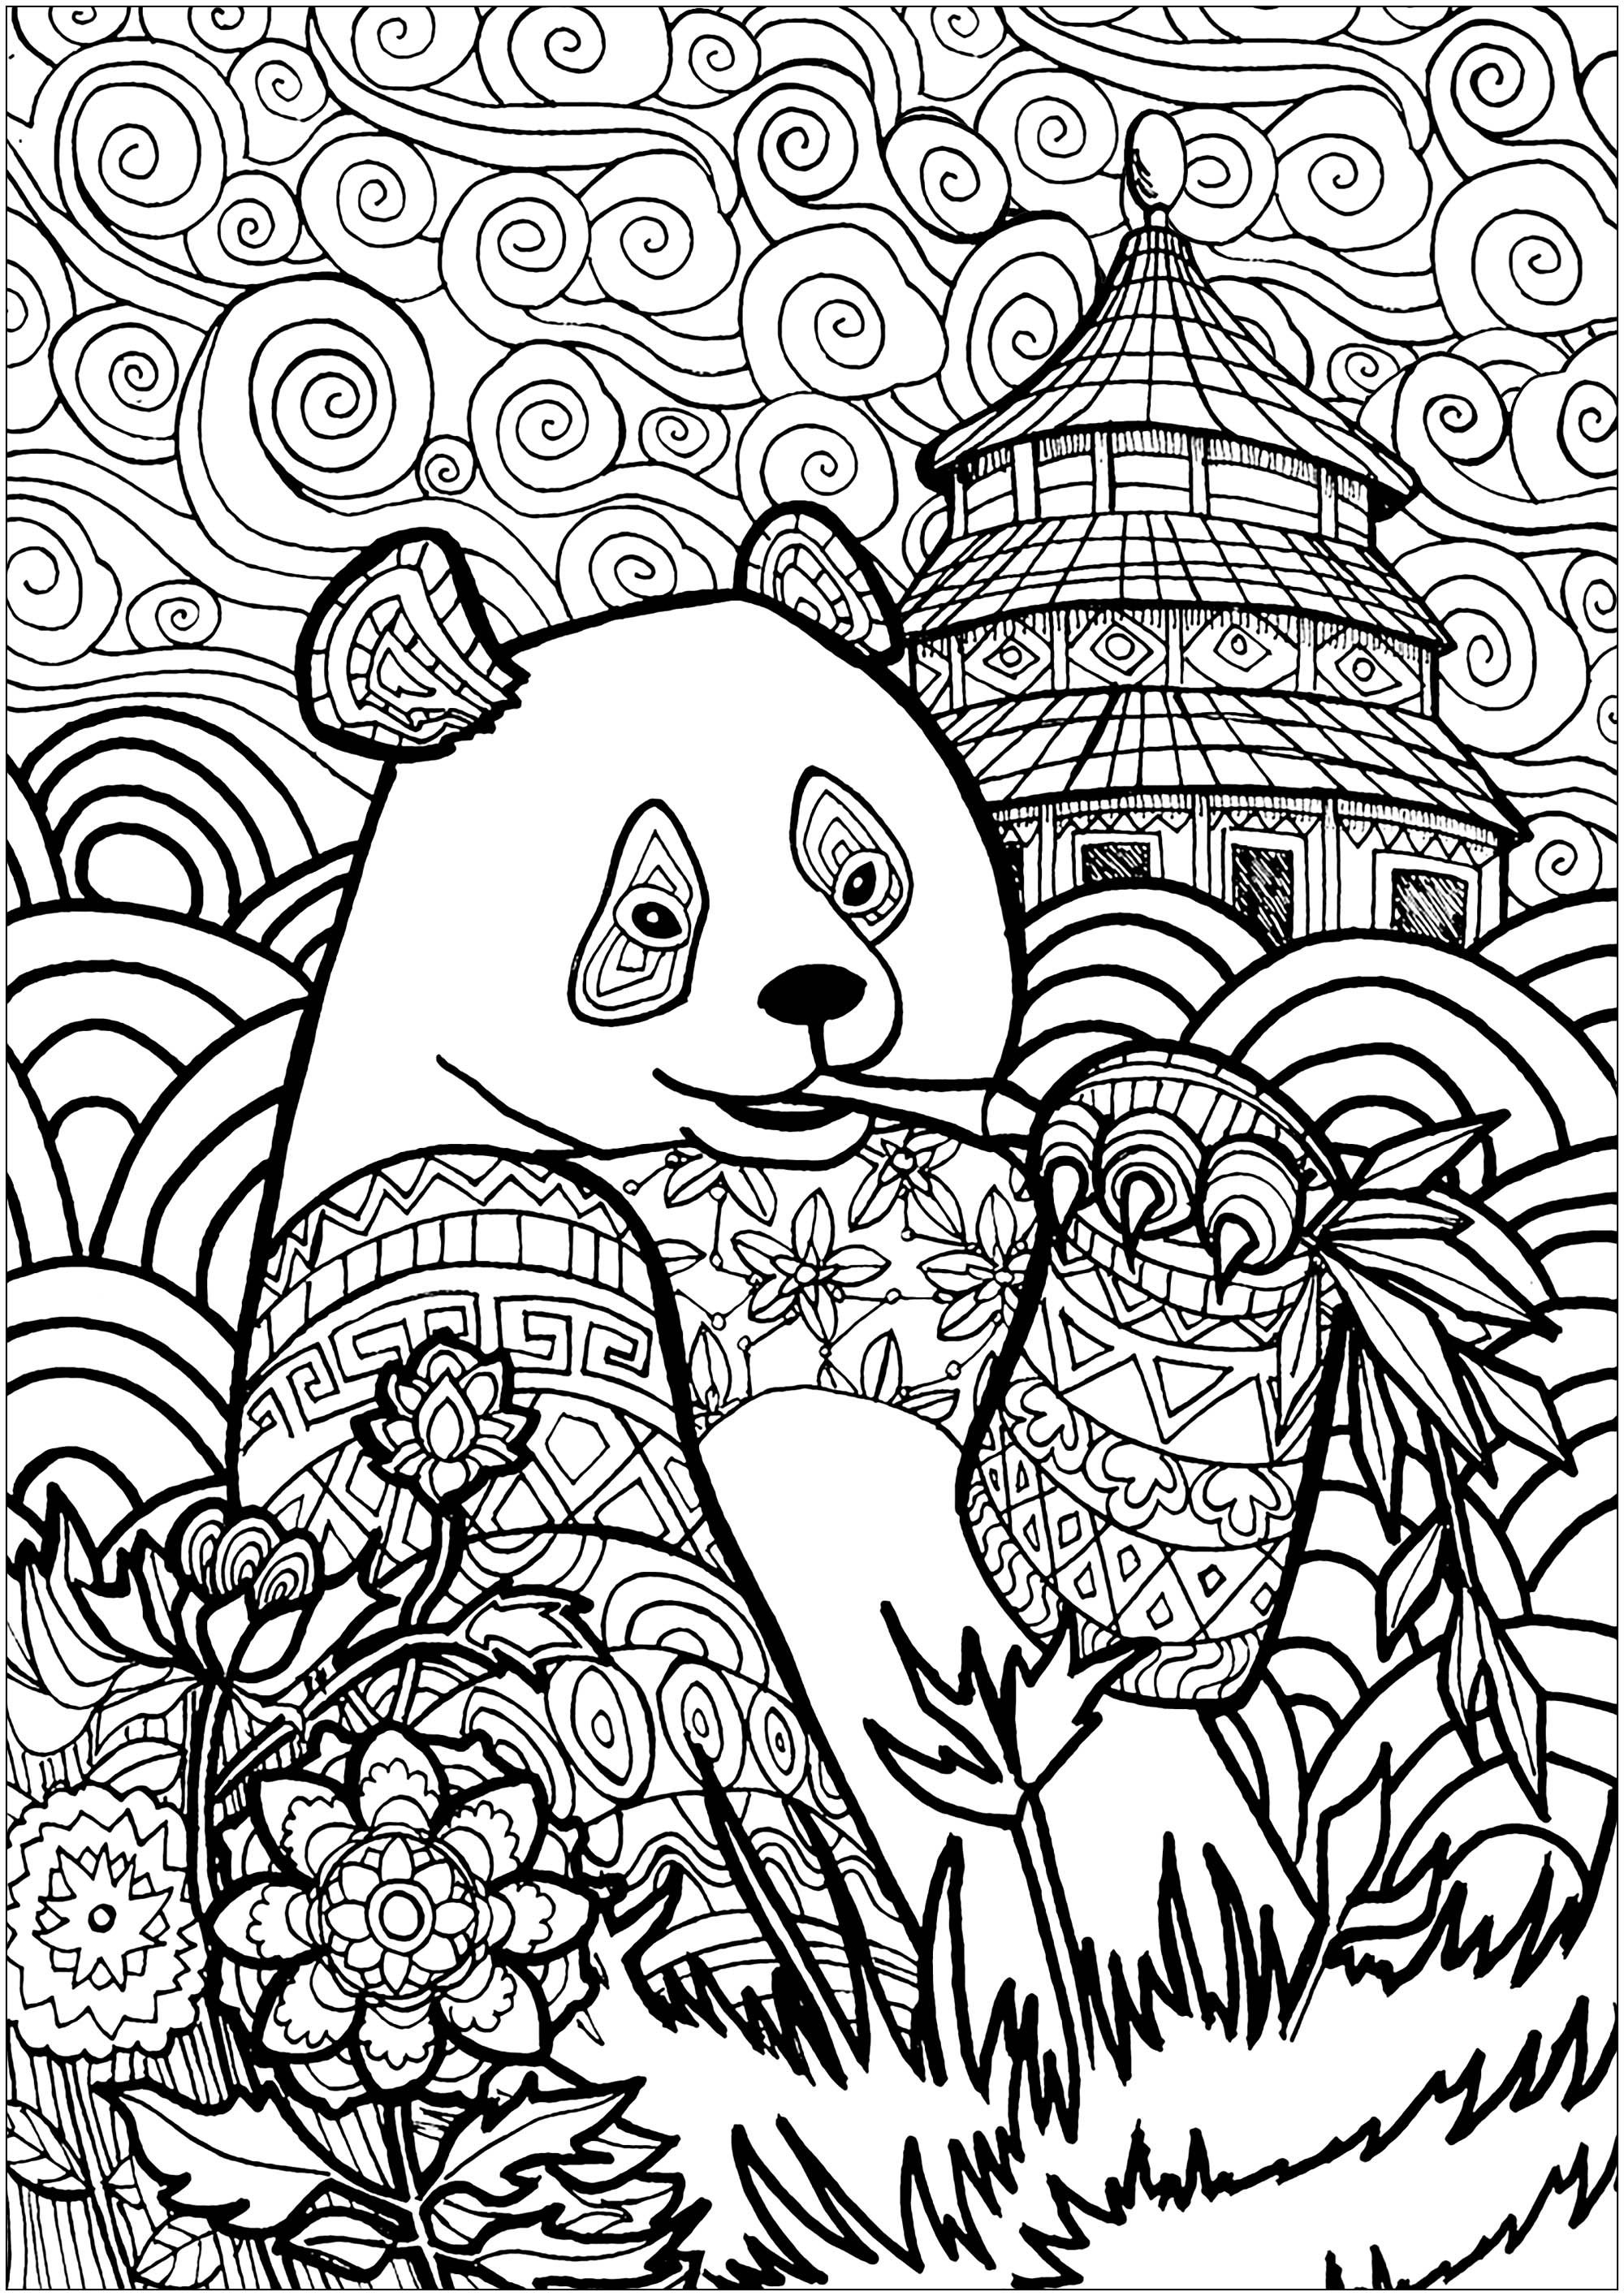 Panda in China - Panda Adult Coloring Pages